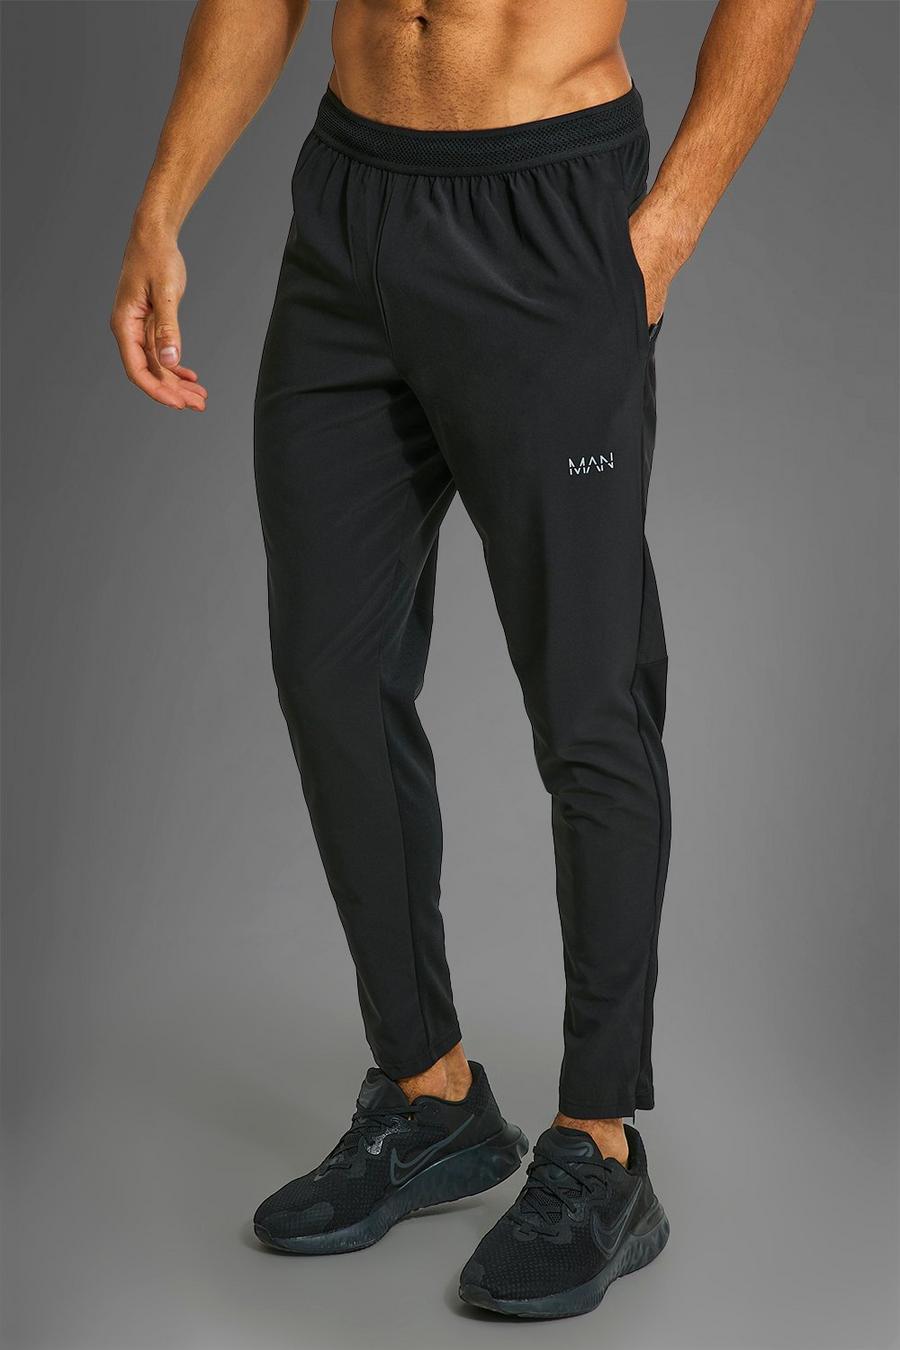 Black Man Active Gym Performance Sweatpant Zip Pockets